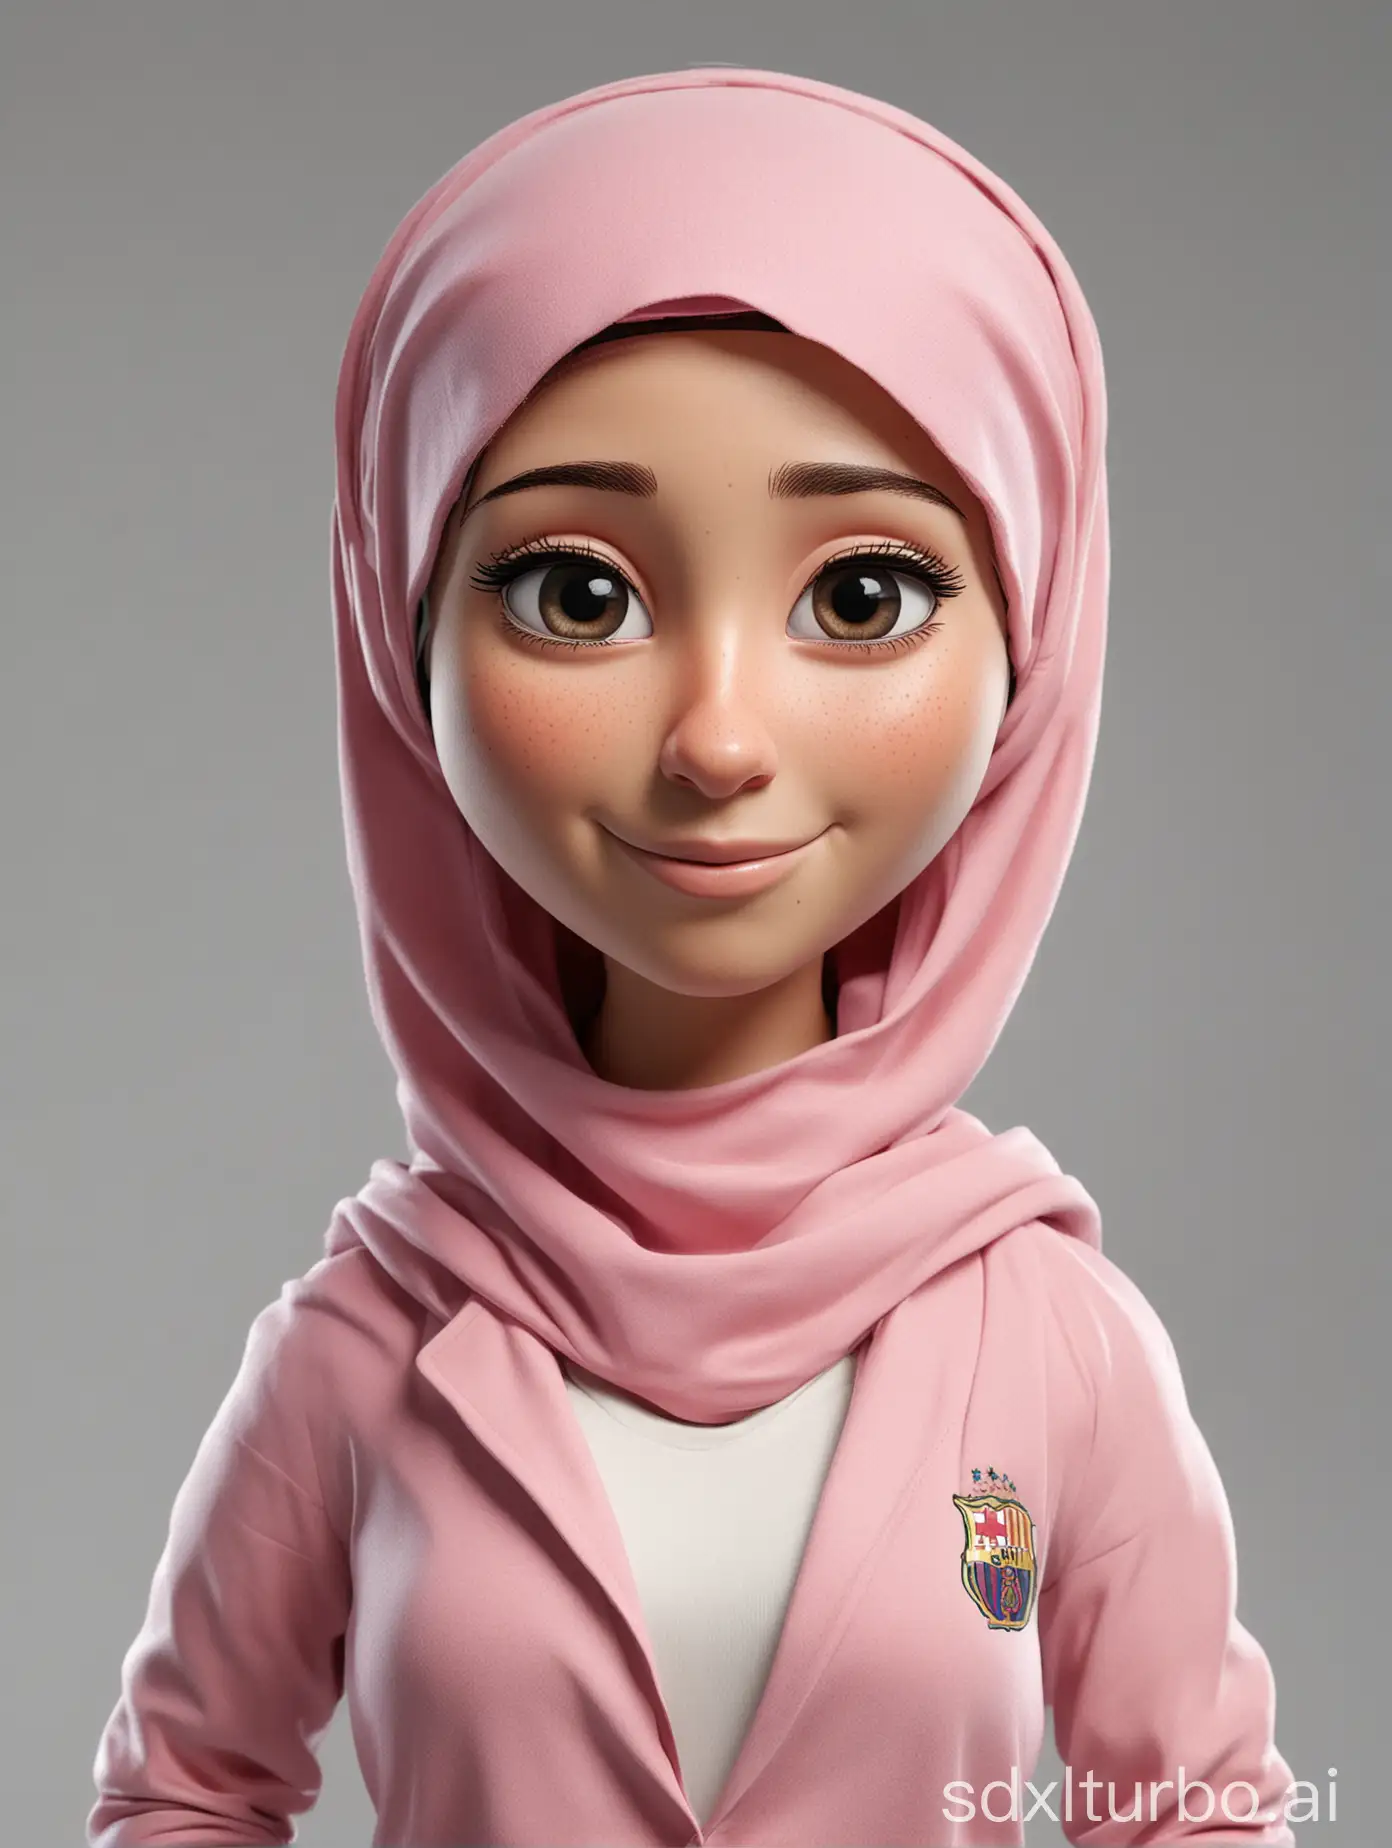 Leo-Messi-Cartoon-Character-in-Pink-Blazer-and-Hijab